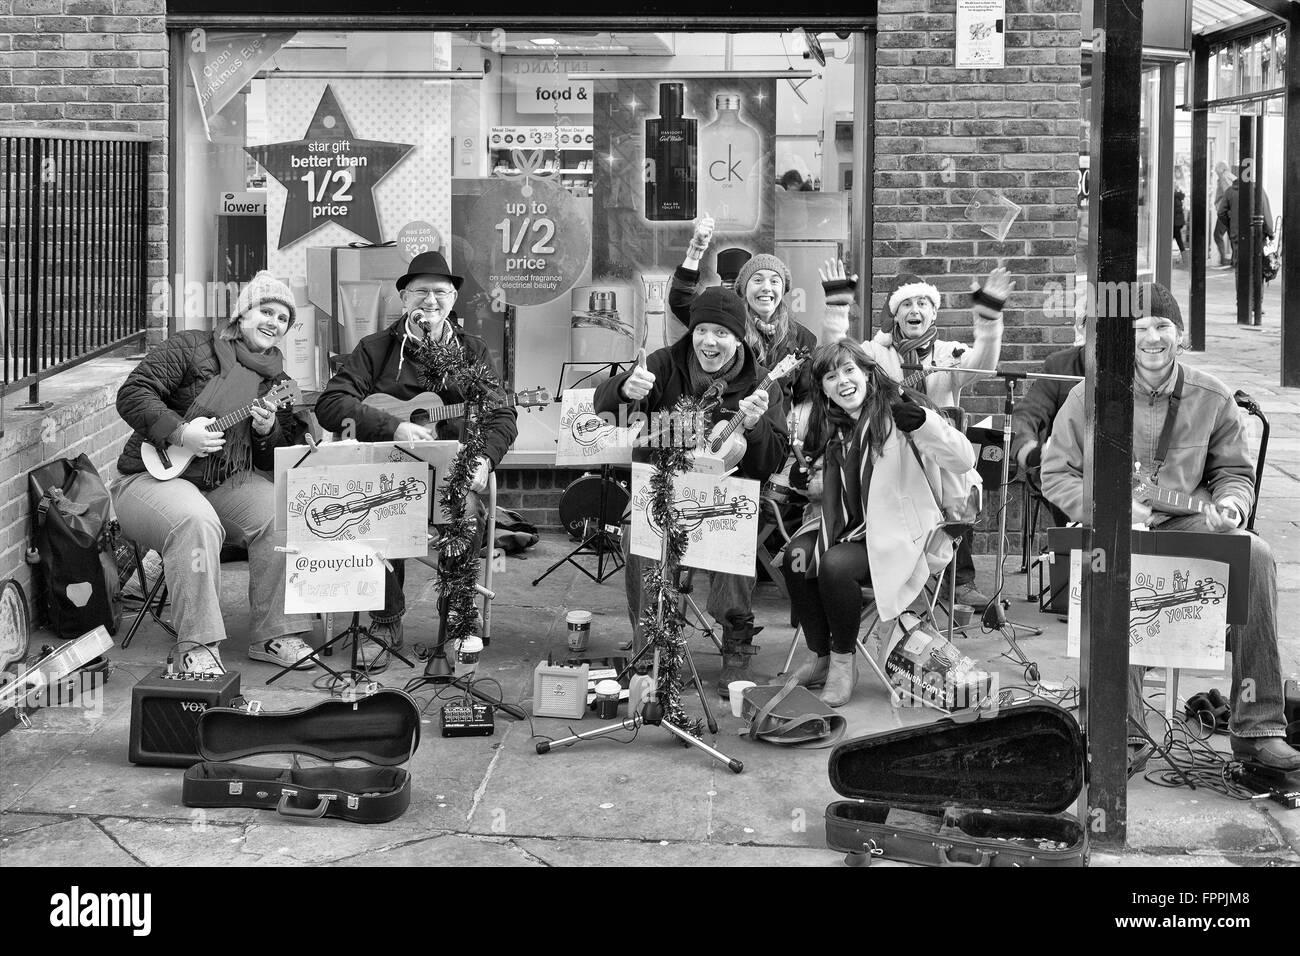 Christmas scene at York UK. Traditional street buskers acknowledging the photographer enjoying Christmas festivities Stock Photo